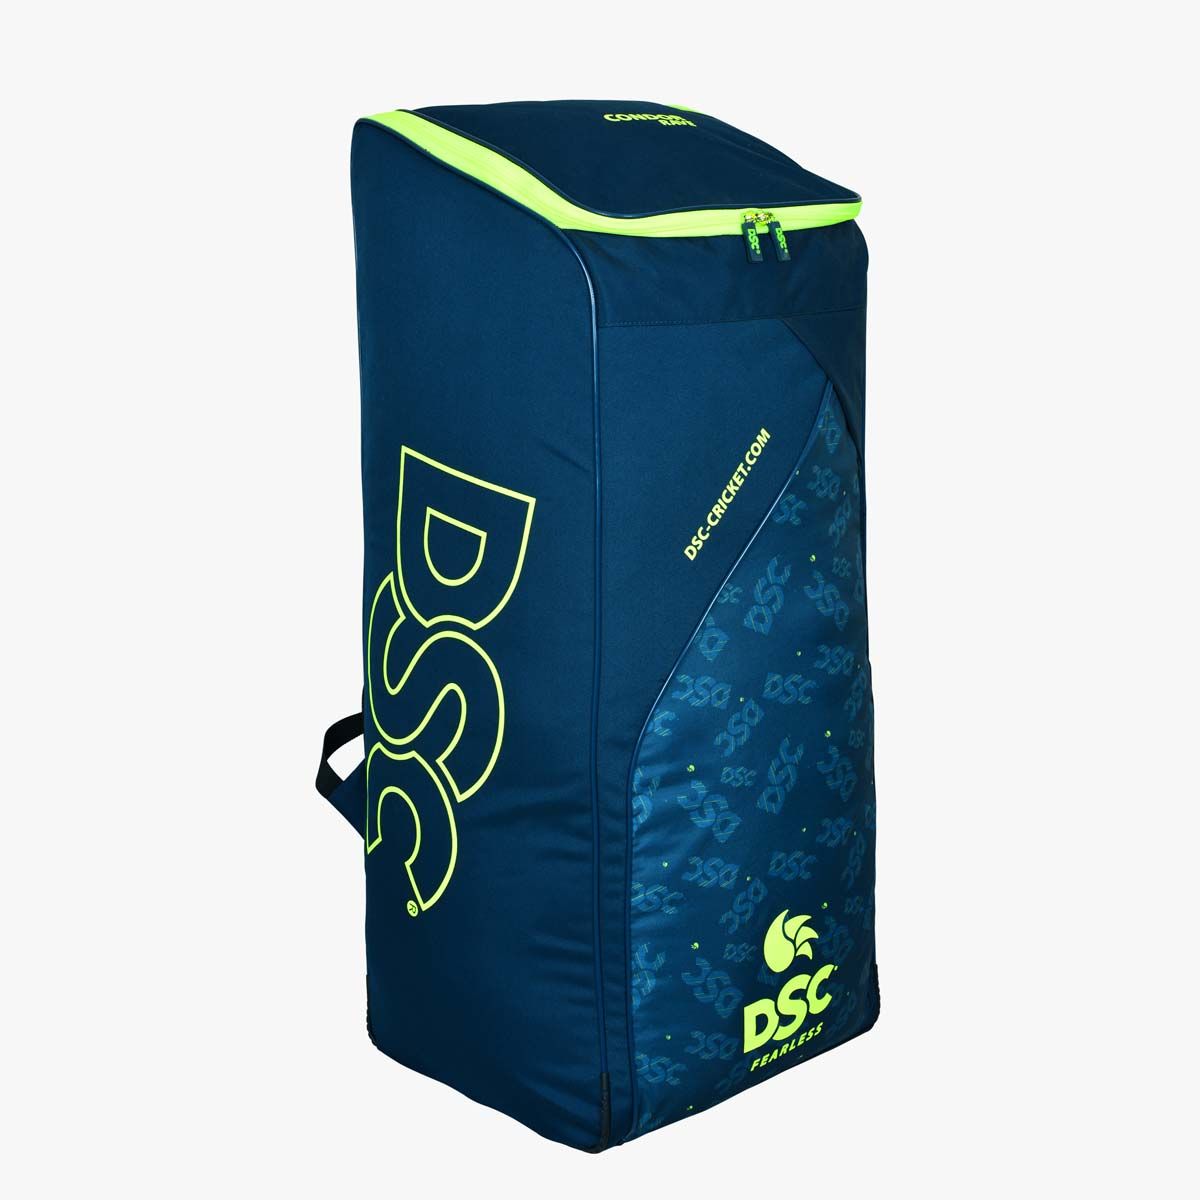 Cricket Kit Bag DSC CONDOR RAVE DUFFLE